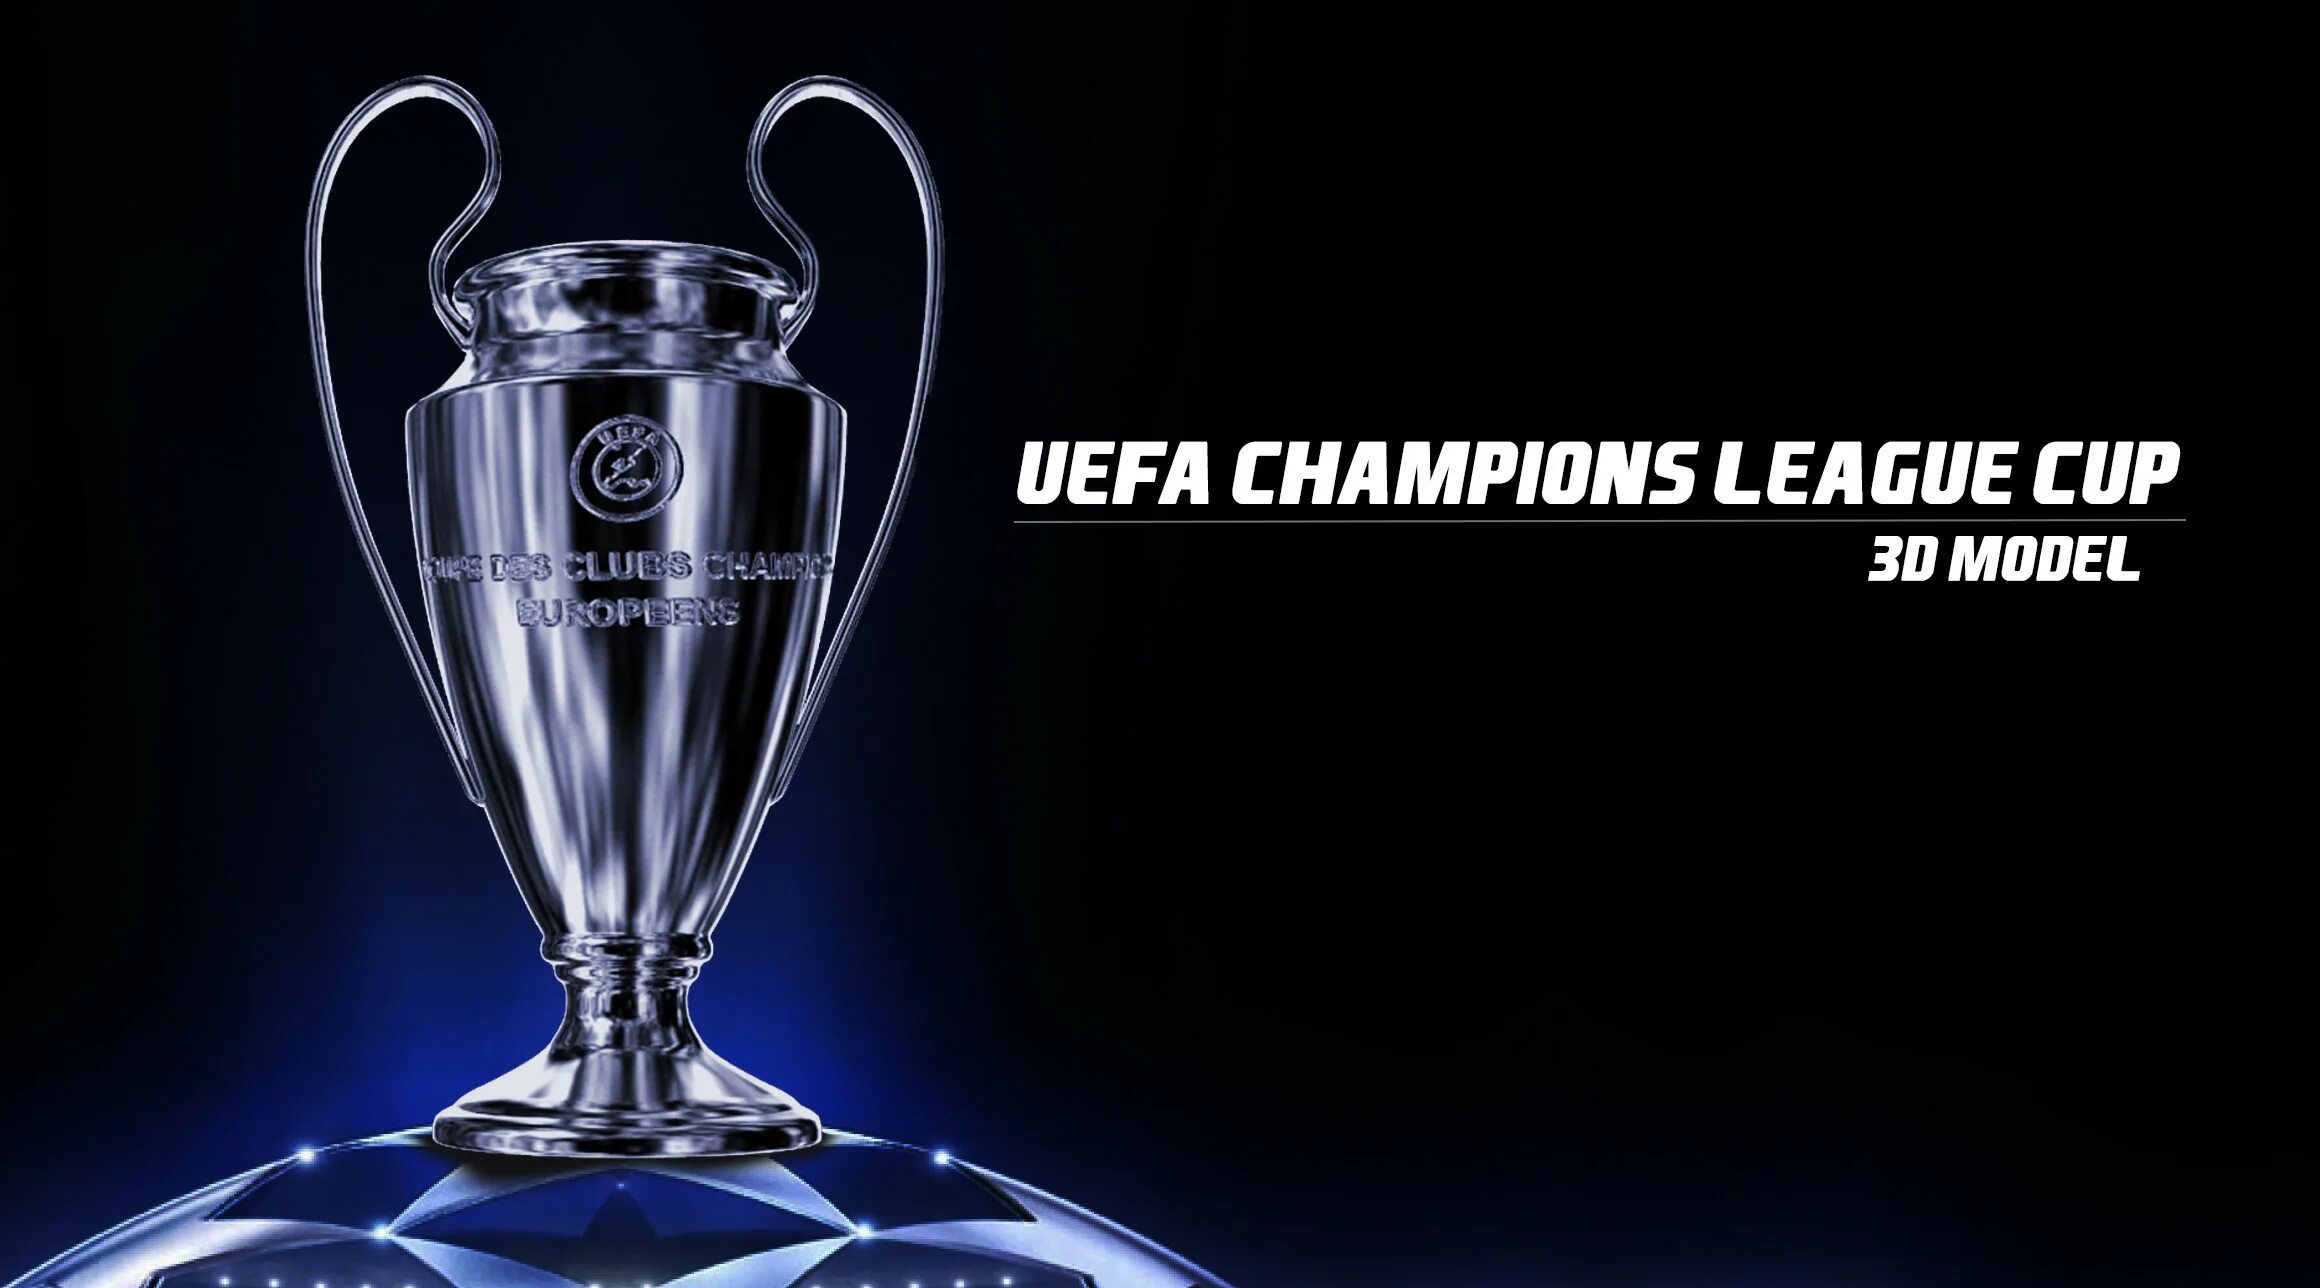 Лига cup. UEFA Champions League Cup. Кубок Лиги чемпионов арт. Рисунок UEFA Champions League Кубок.